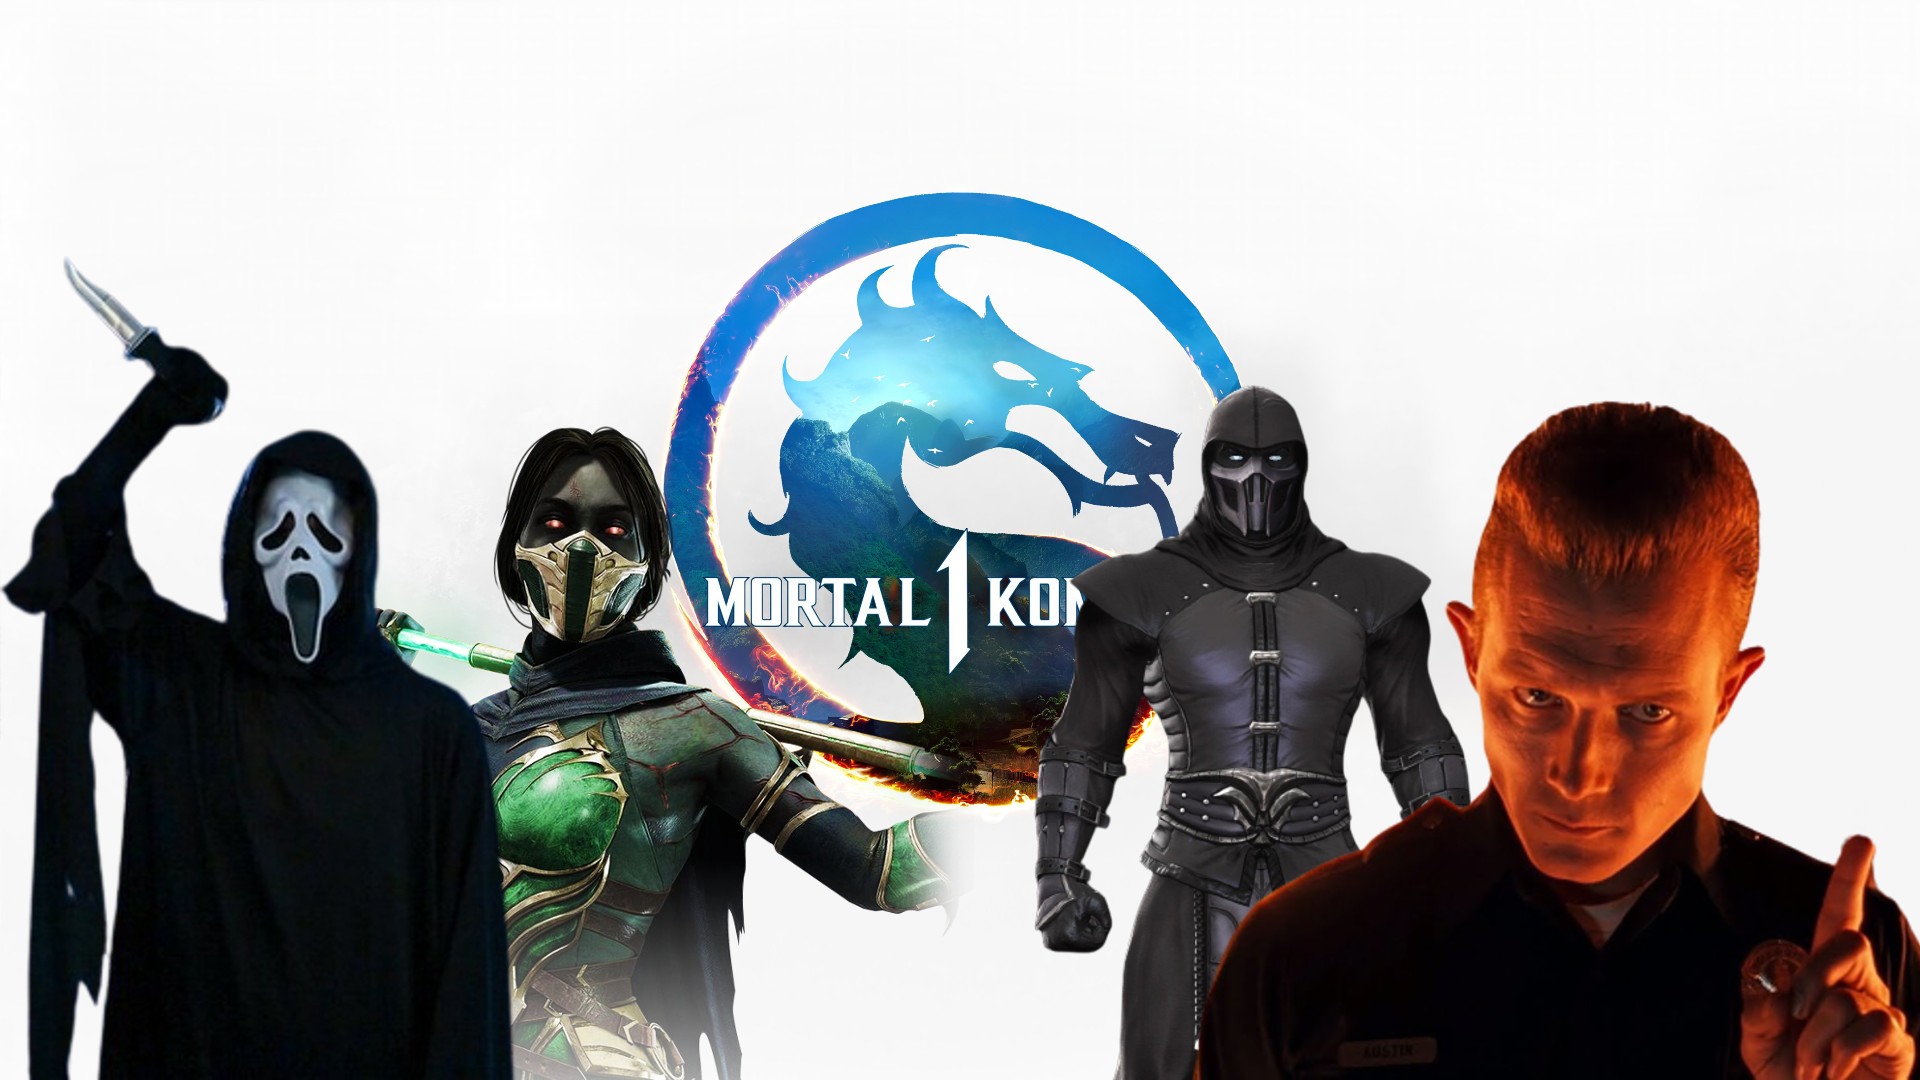 MORTAL KOMBAT 1 - Kombat Pack 2 DLC Characters & Kameo Fighters LEAKED?! 